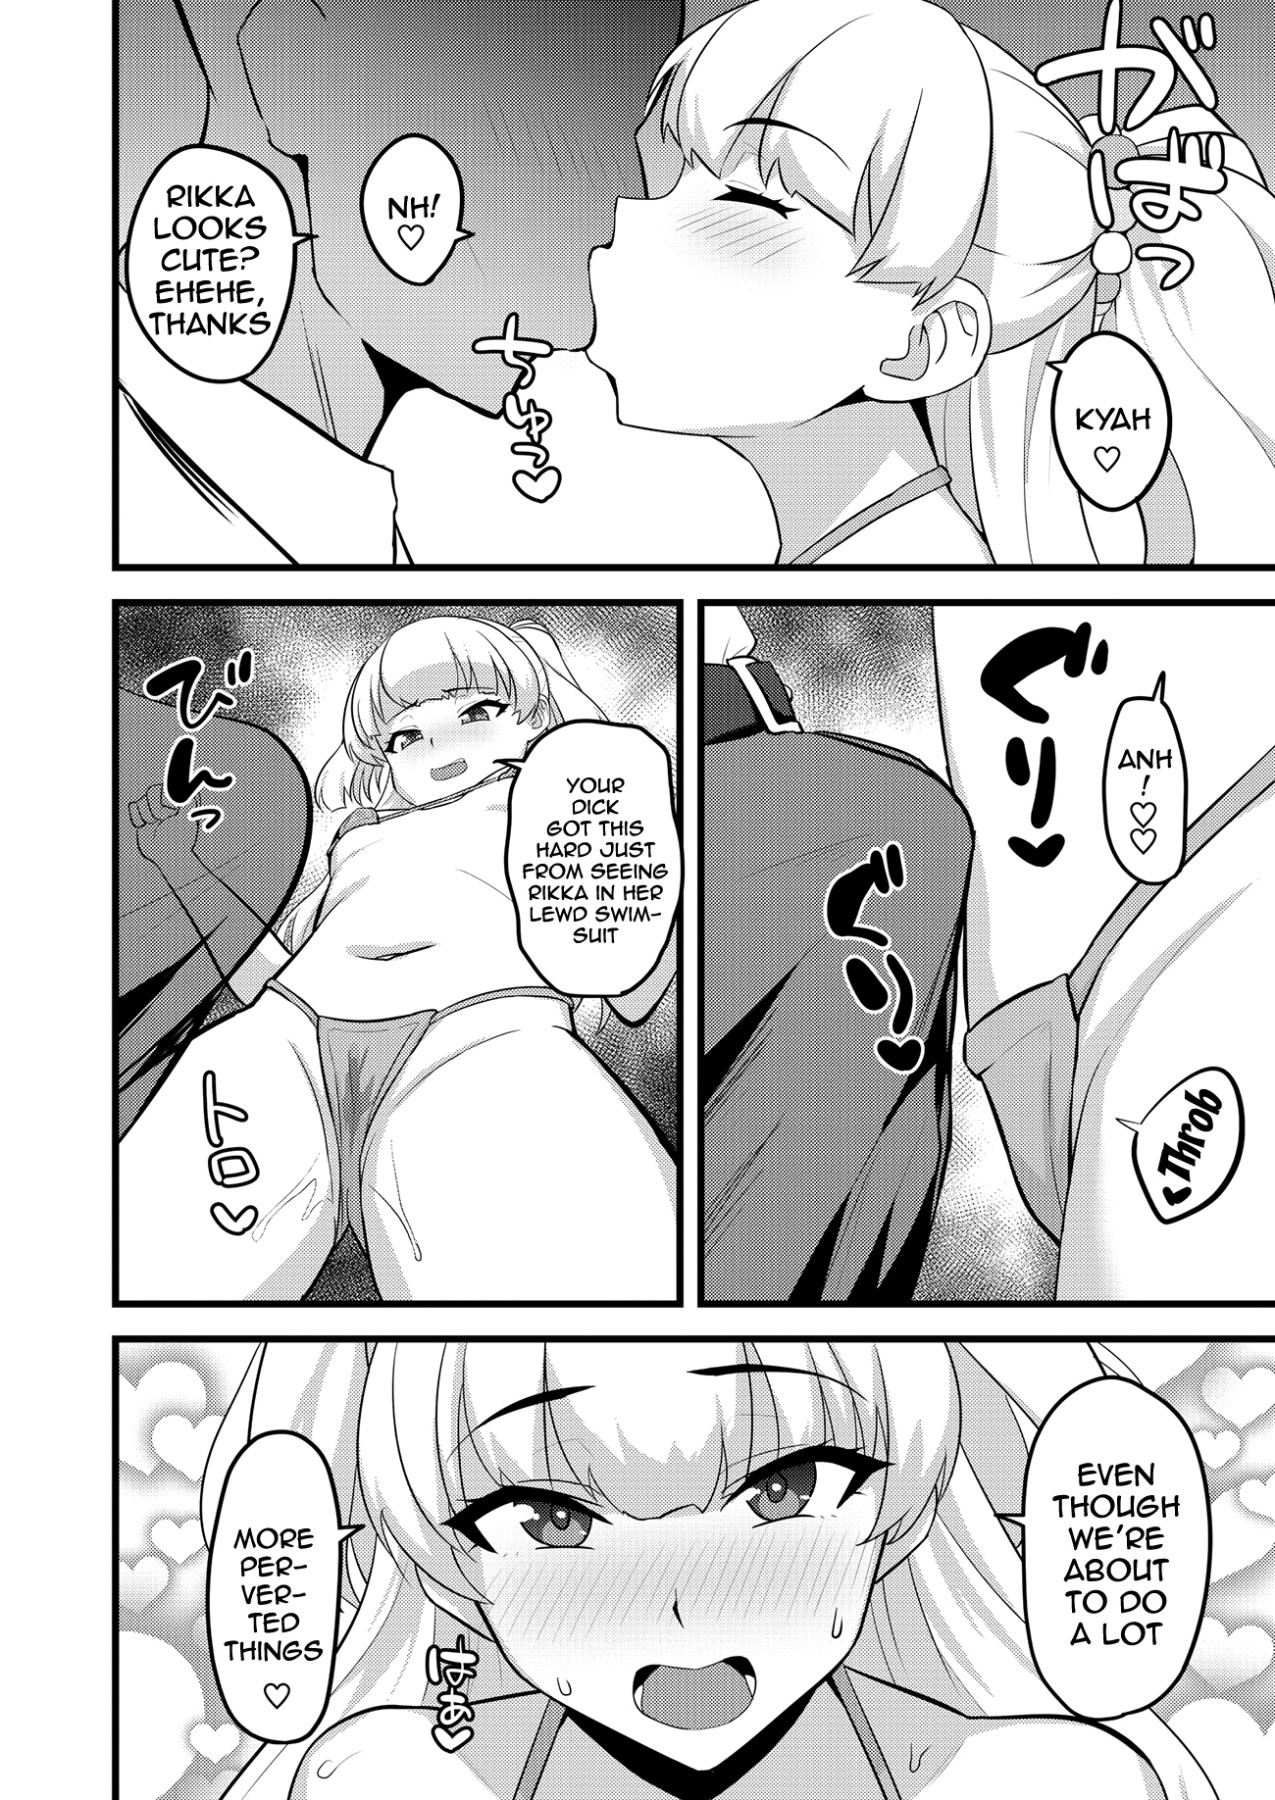 Hentai Manga Comic-You Really Like This Kind of Thing, Don't You P-kun?-Read-3